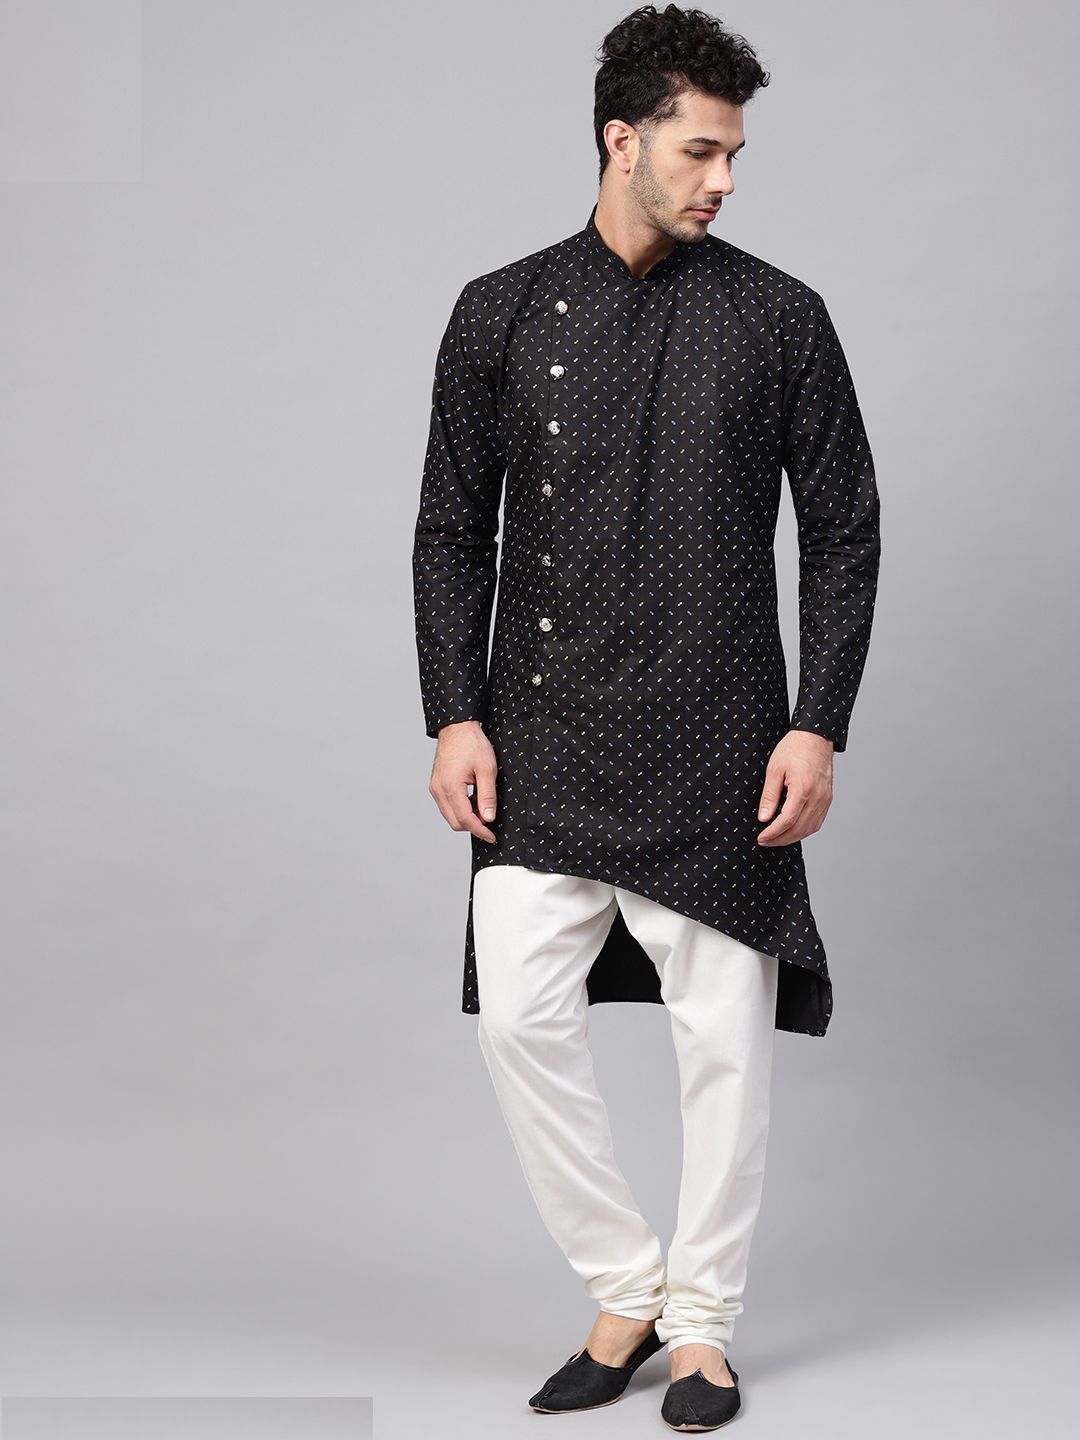 Buy Dark Brown Roll Up Sleeve Linen Short Kurta for men online in India  SizeKurta 42 Color Brown